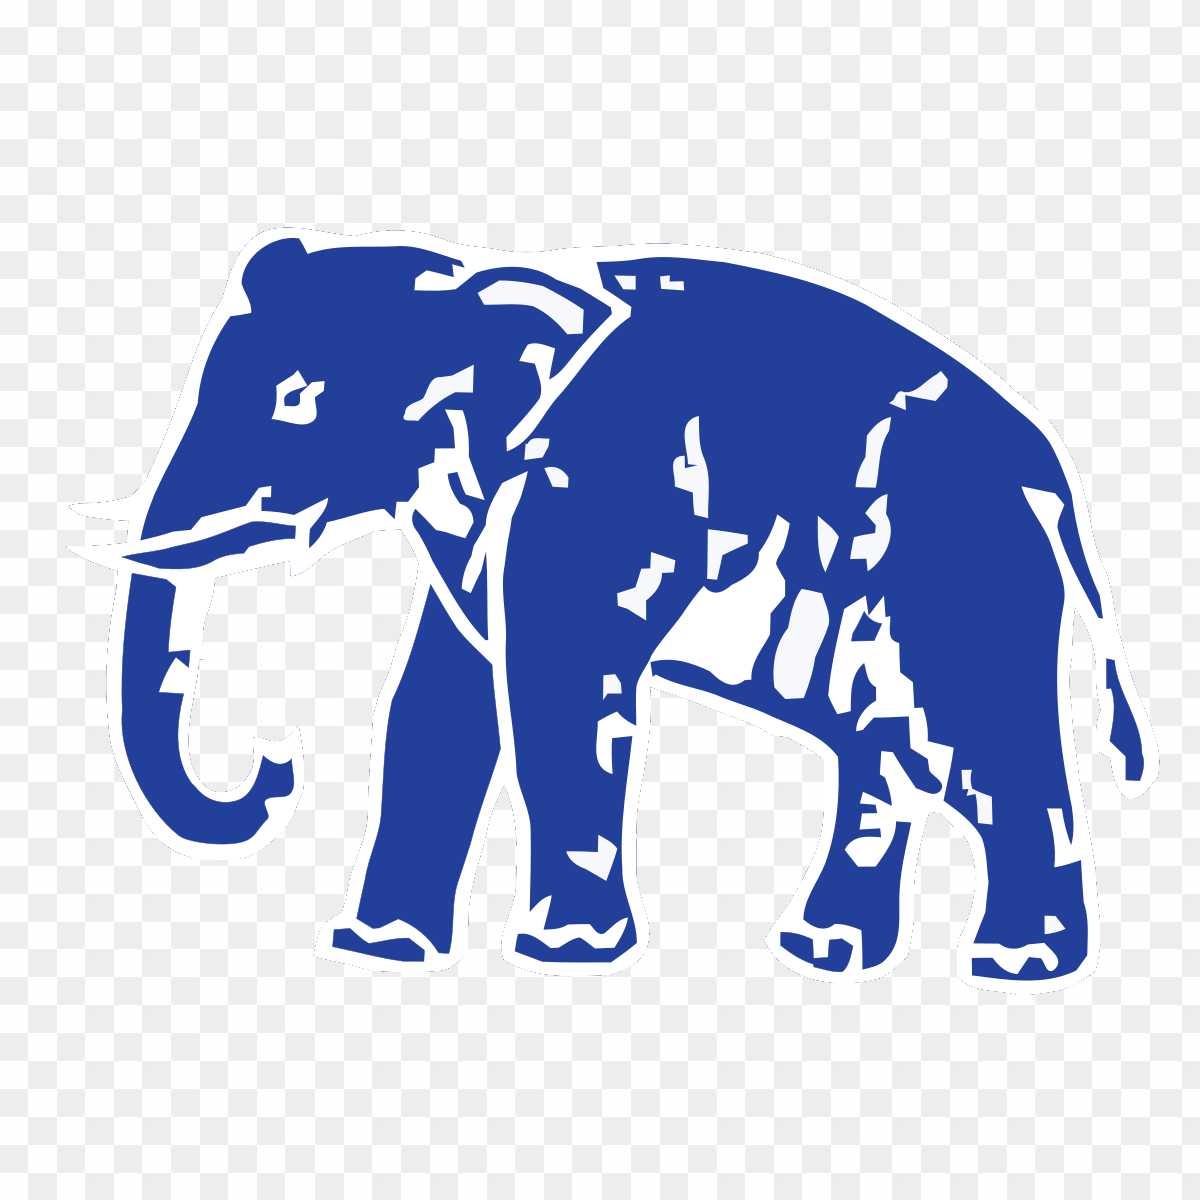 Bahujan Samaj Party logo elephant png images 